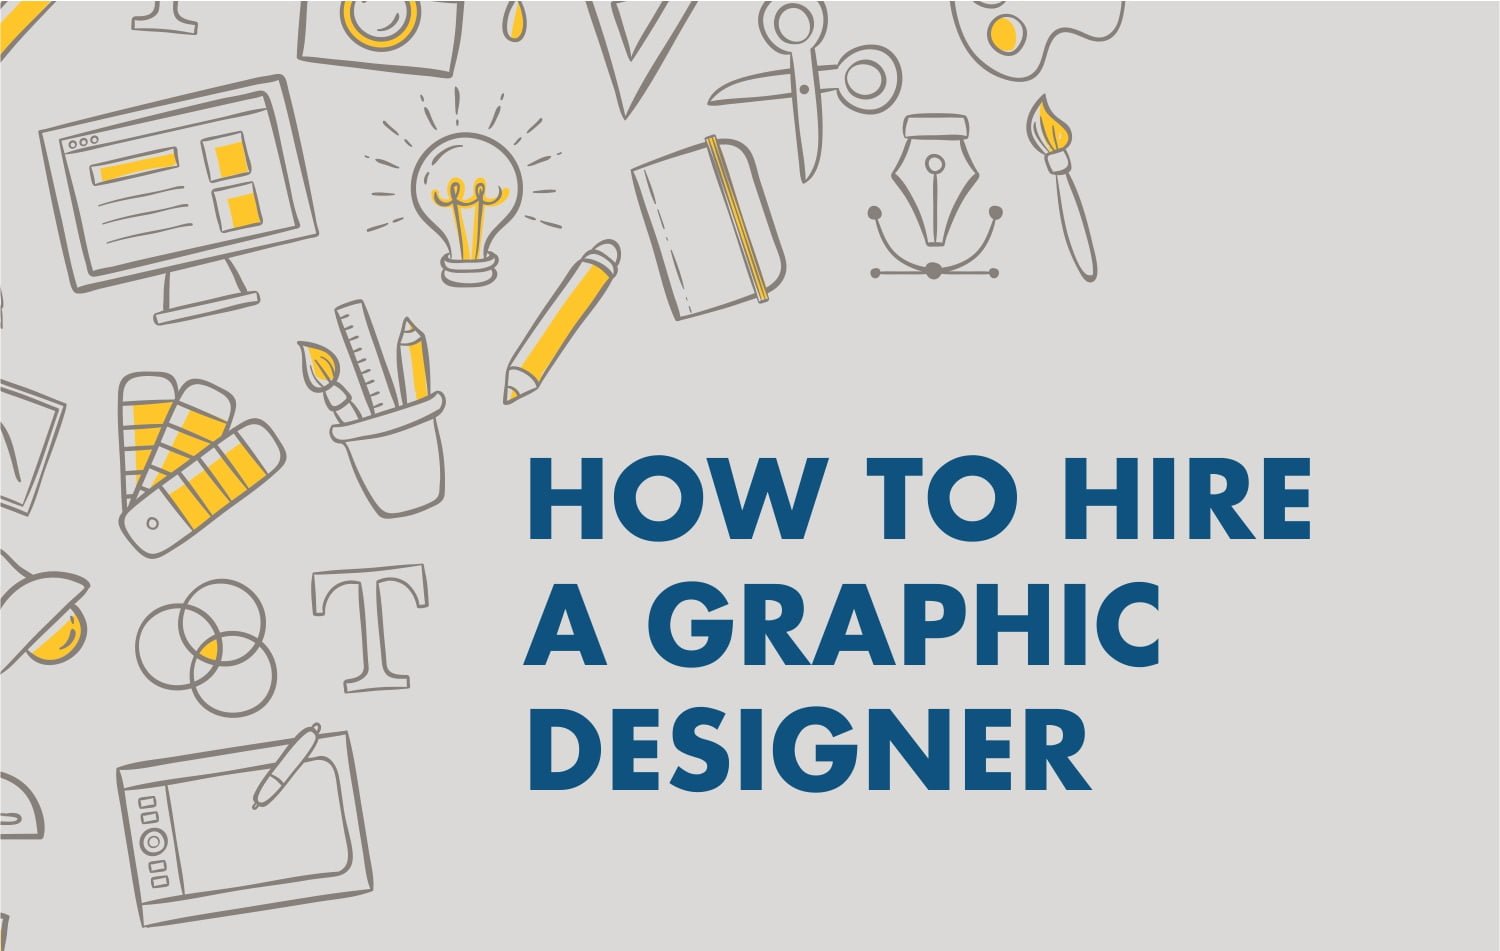 How to hire graphic designer